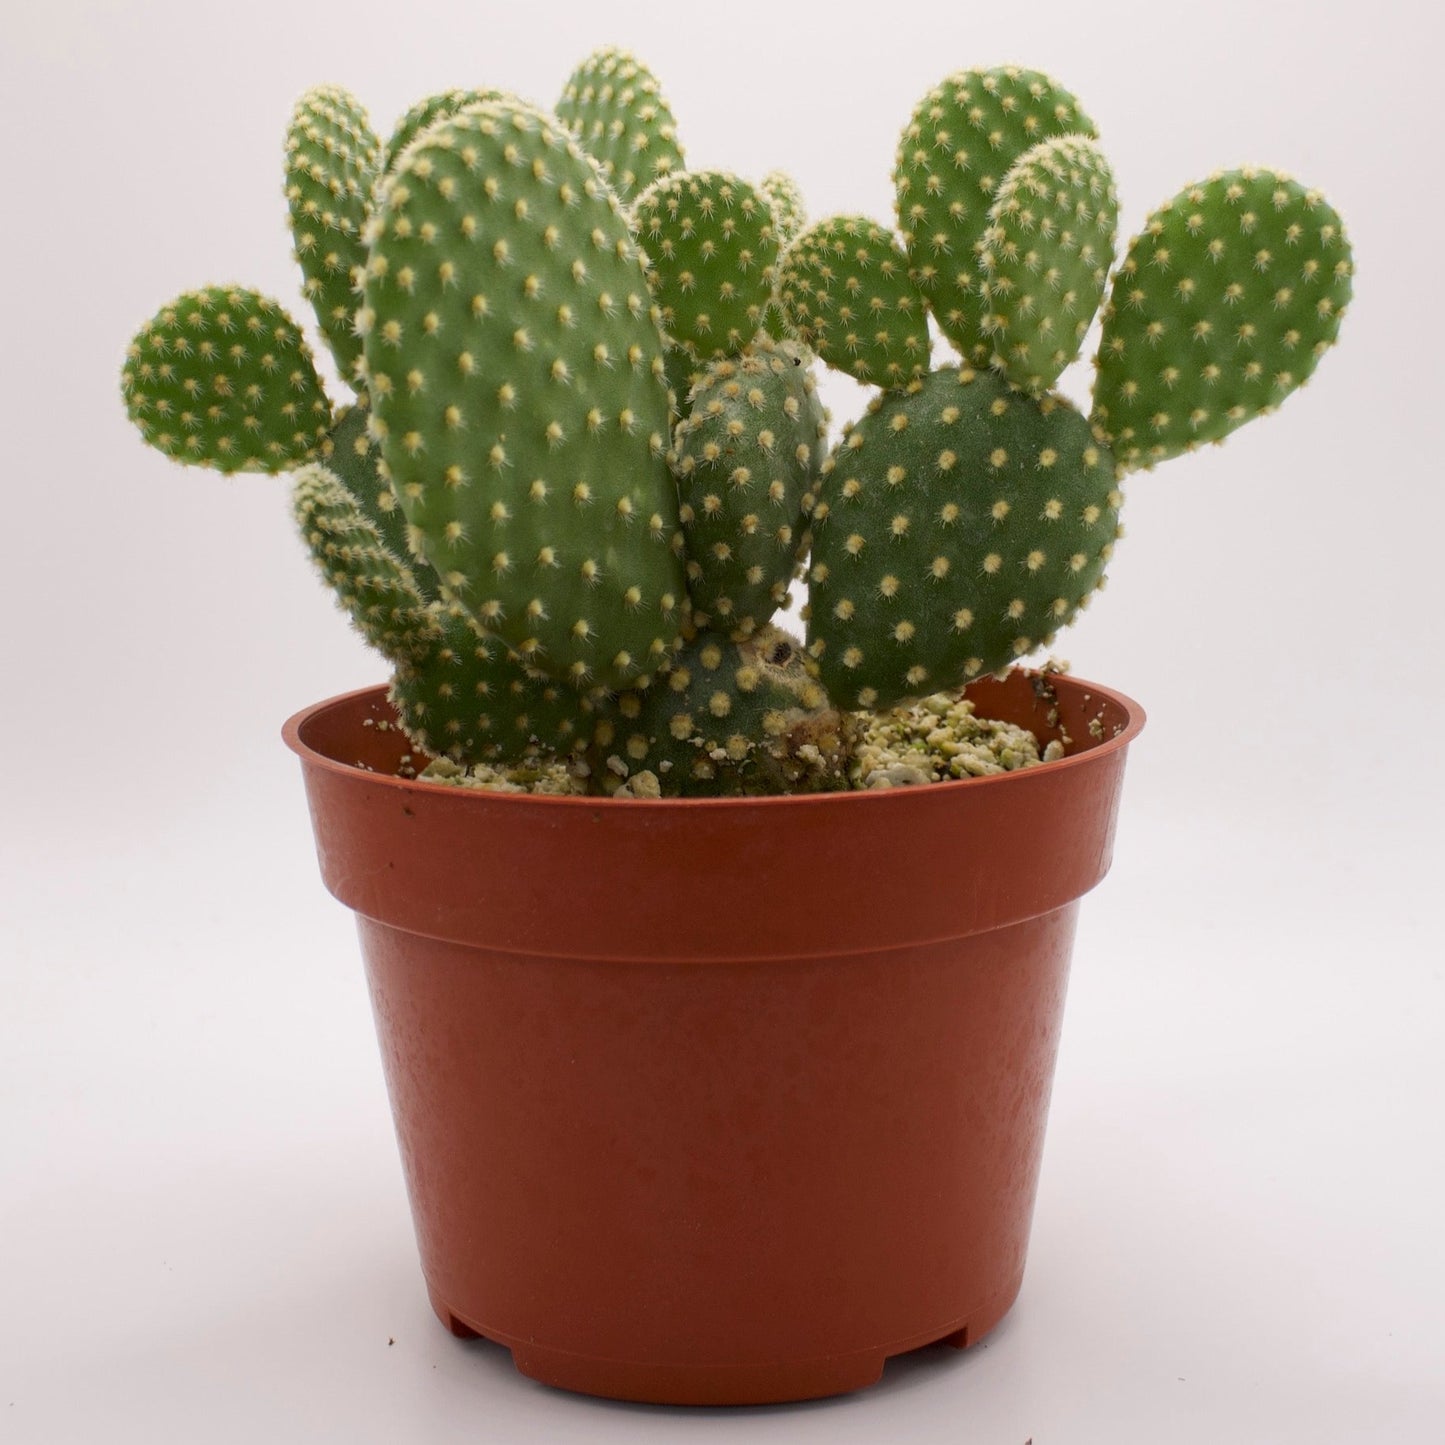 Opuntia Bunny Ears Cactus